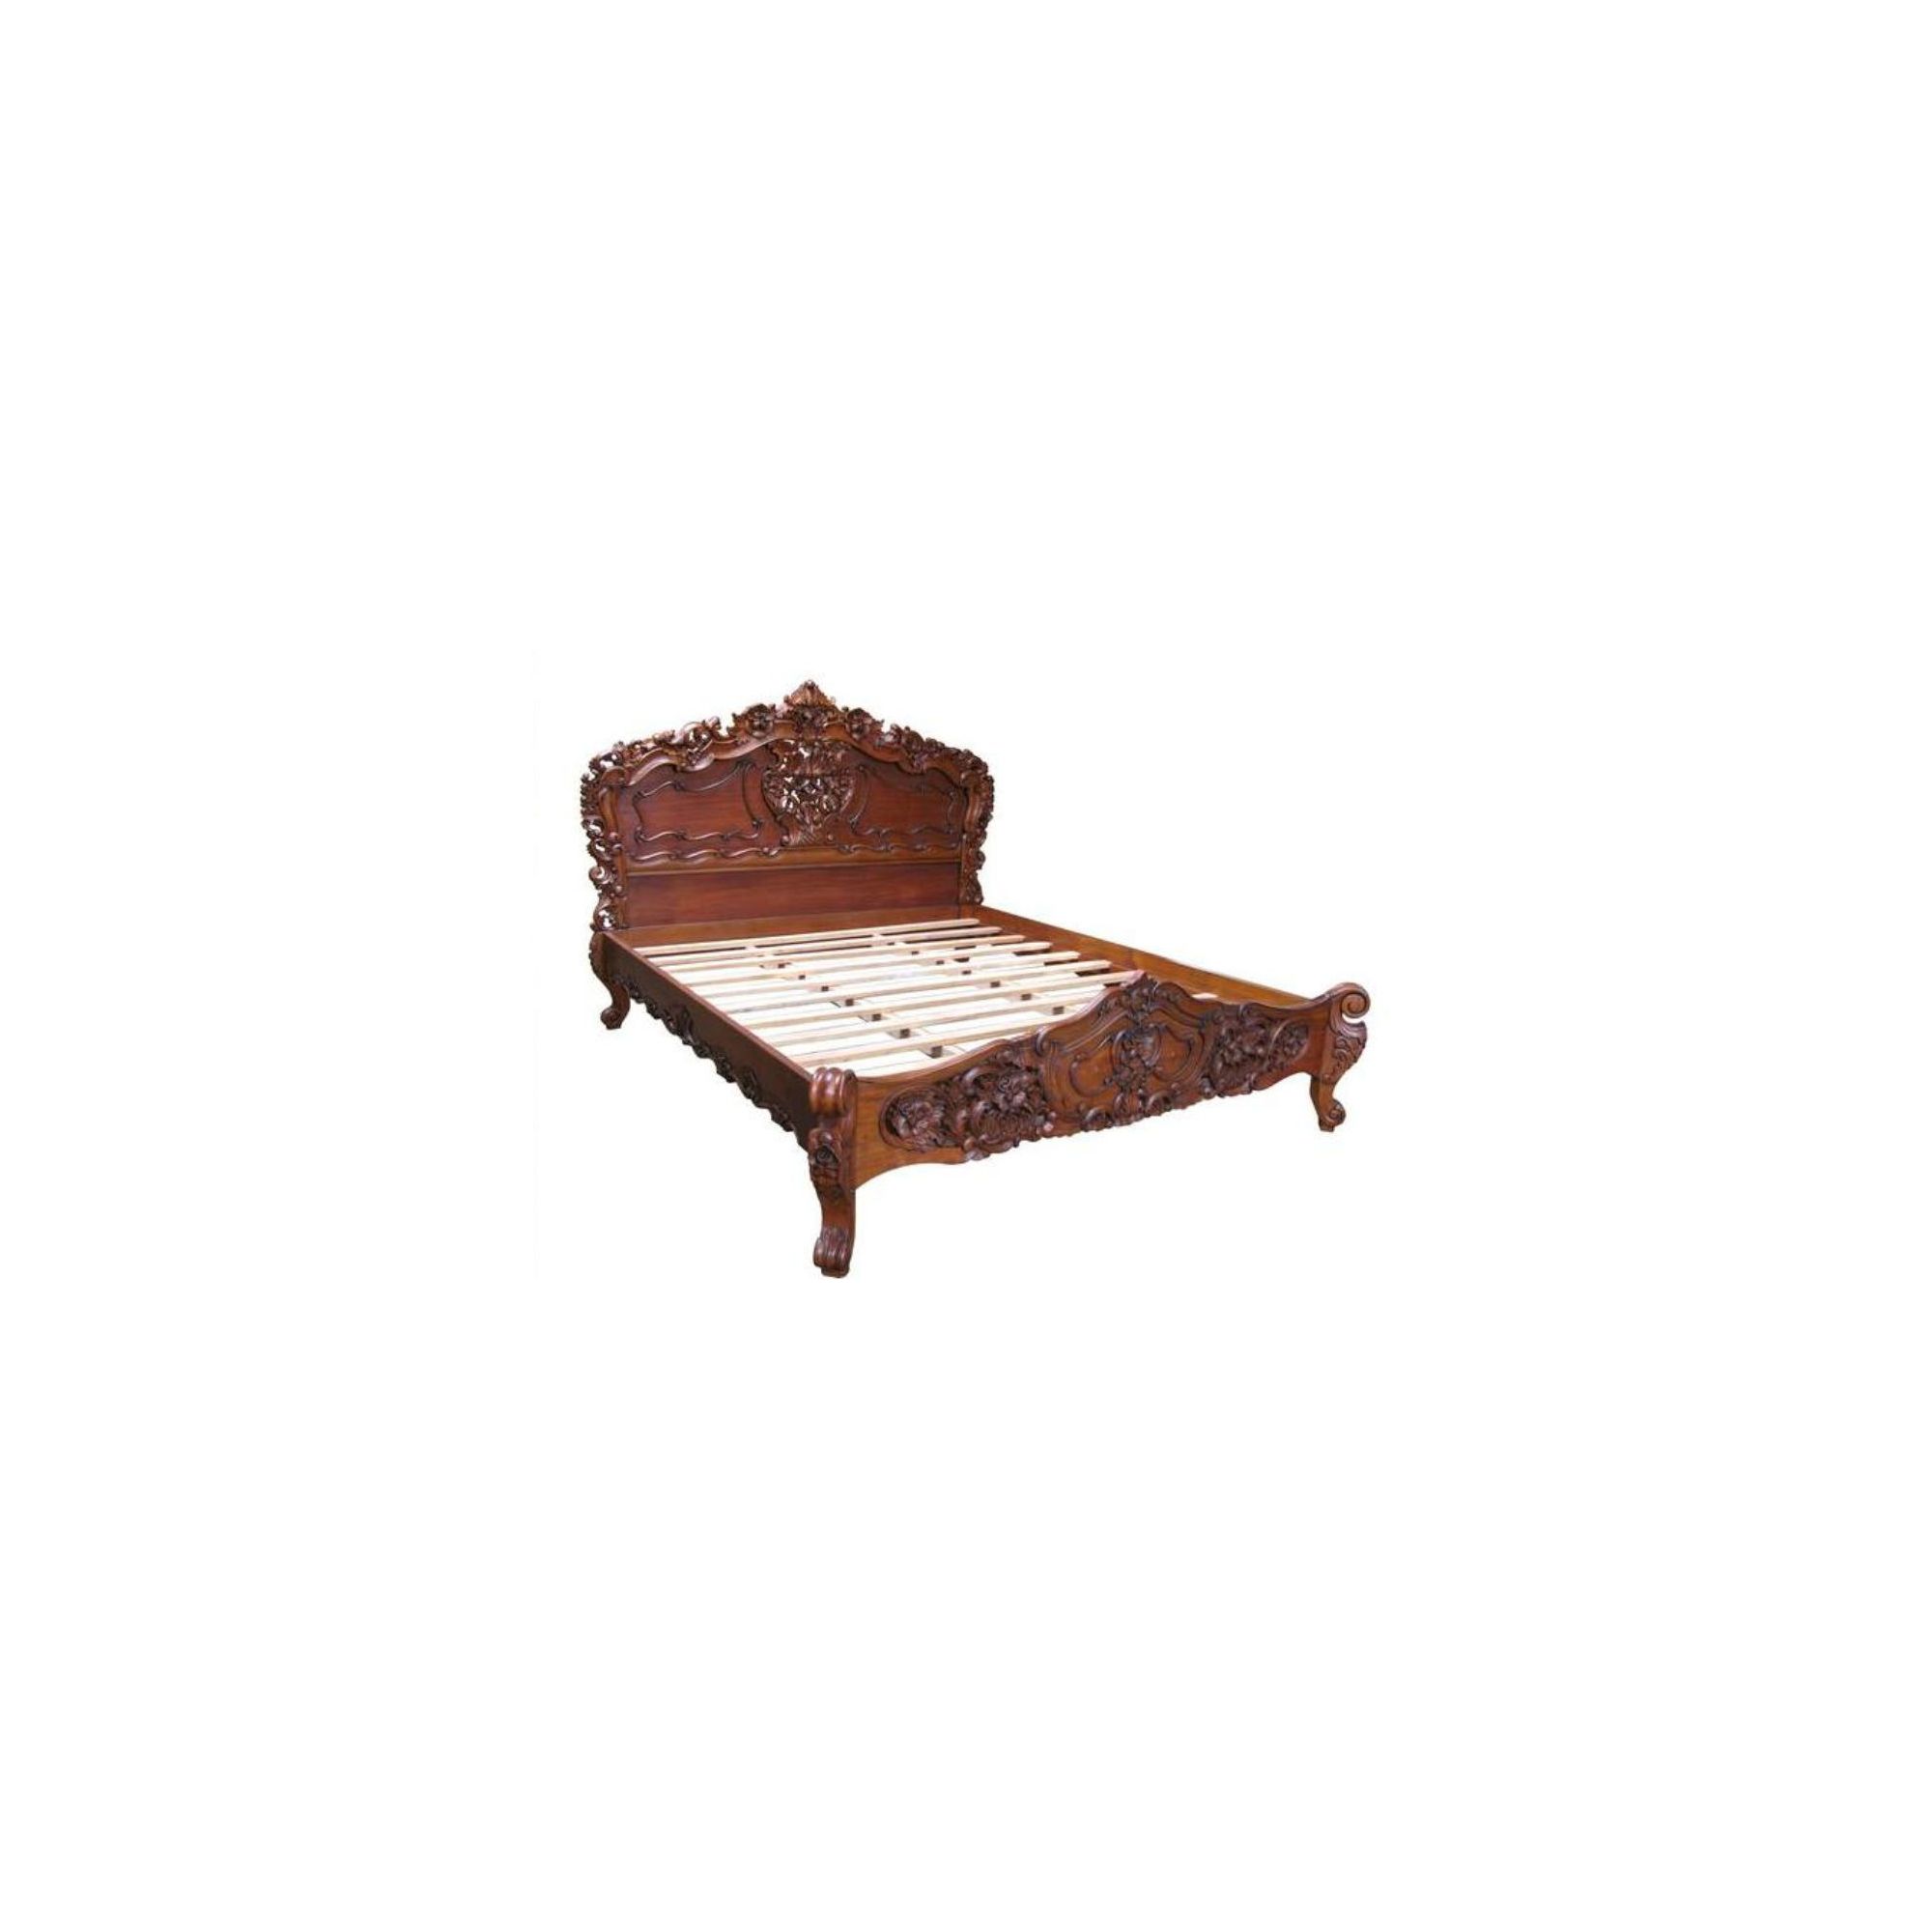 Lock stock and barrel Mahogany Carved Rococo Bed in Mahogany - Wax Polish - King at Tescos Direct